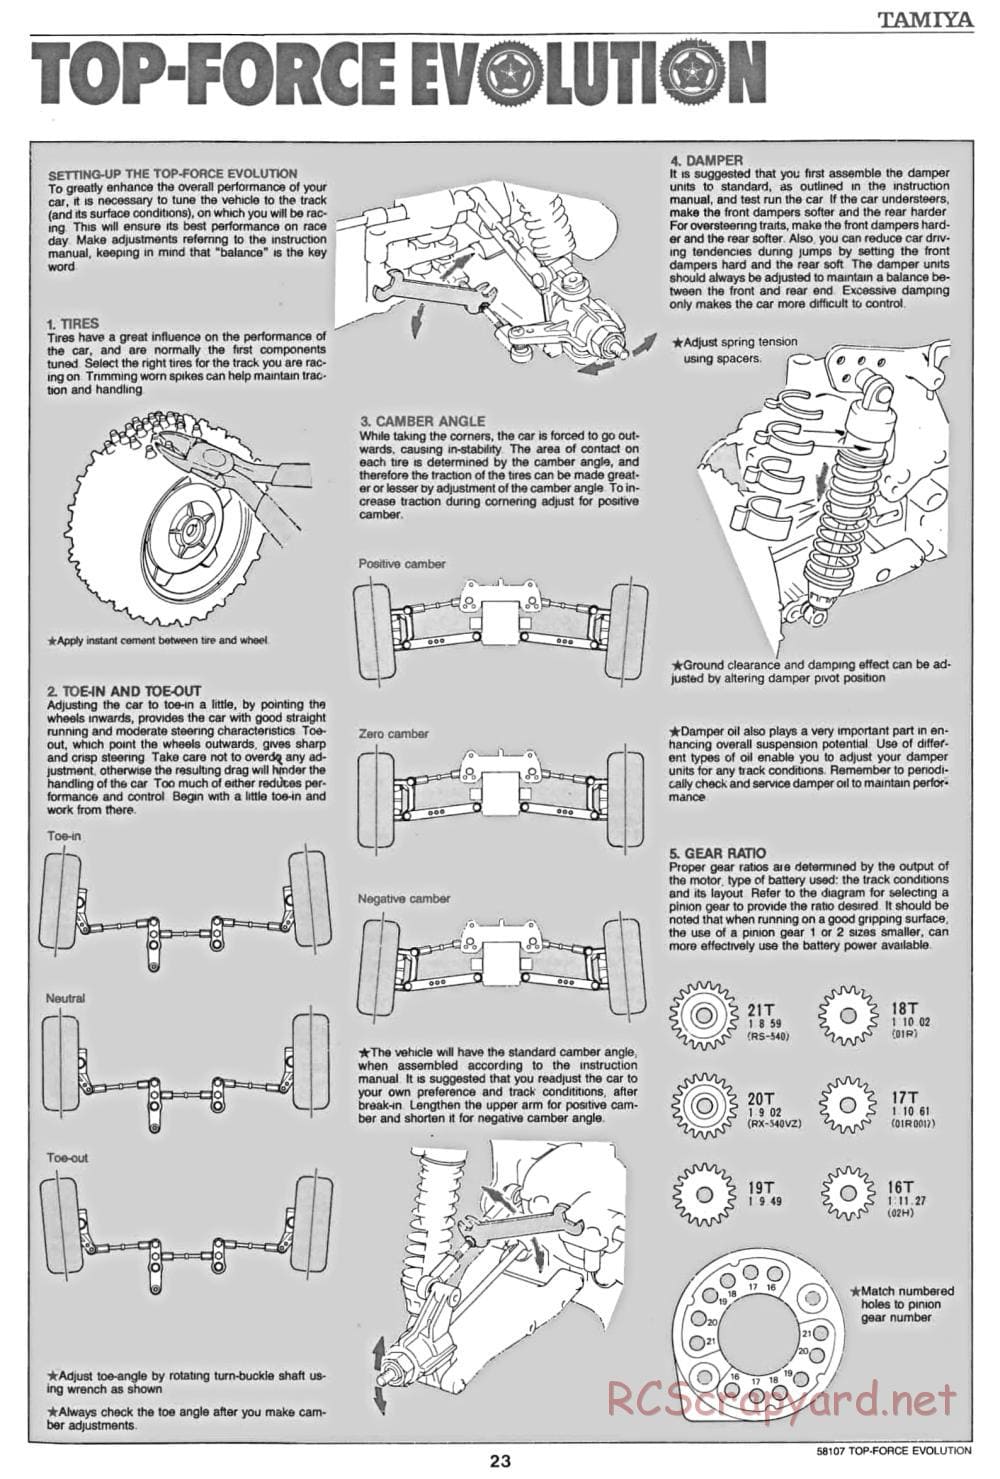 Tamiya - Top Force Evolution Chassis - Manual - Page 23